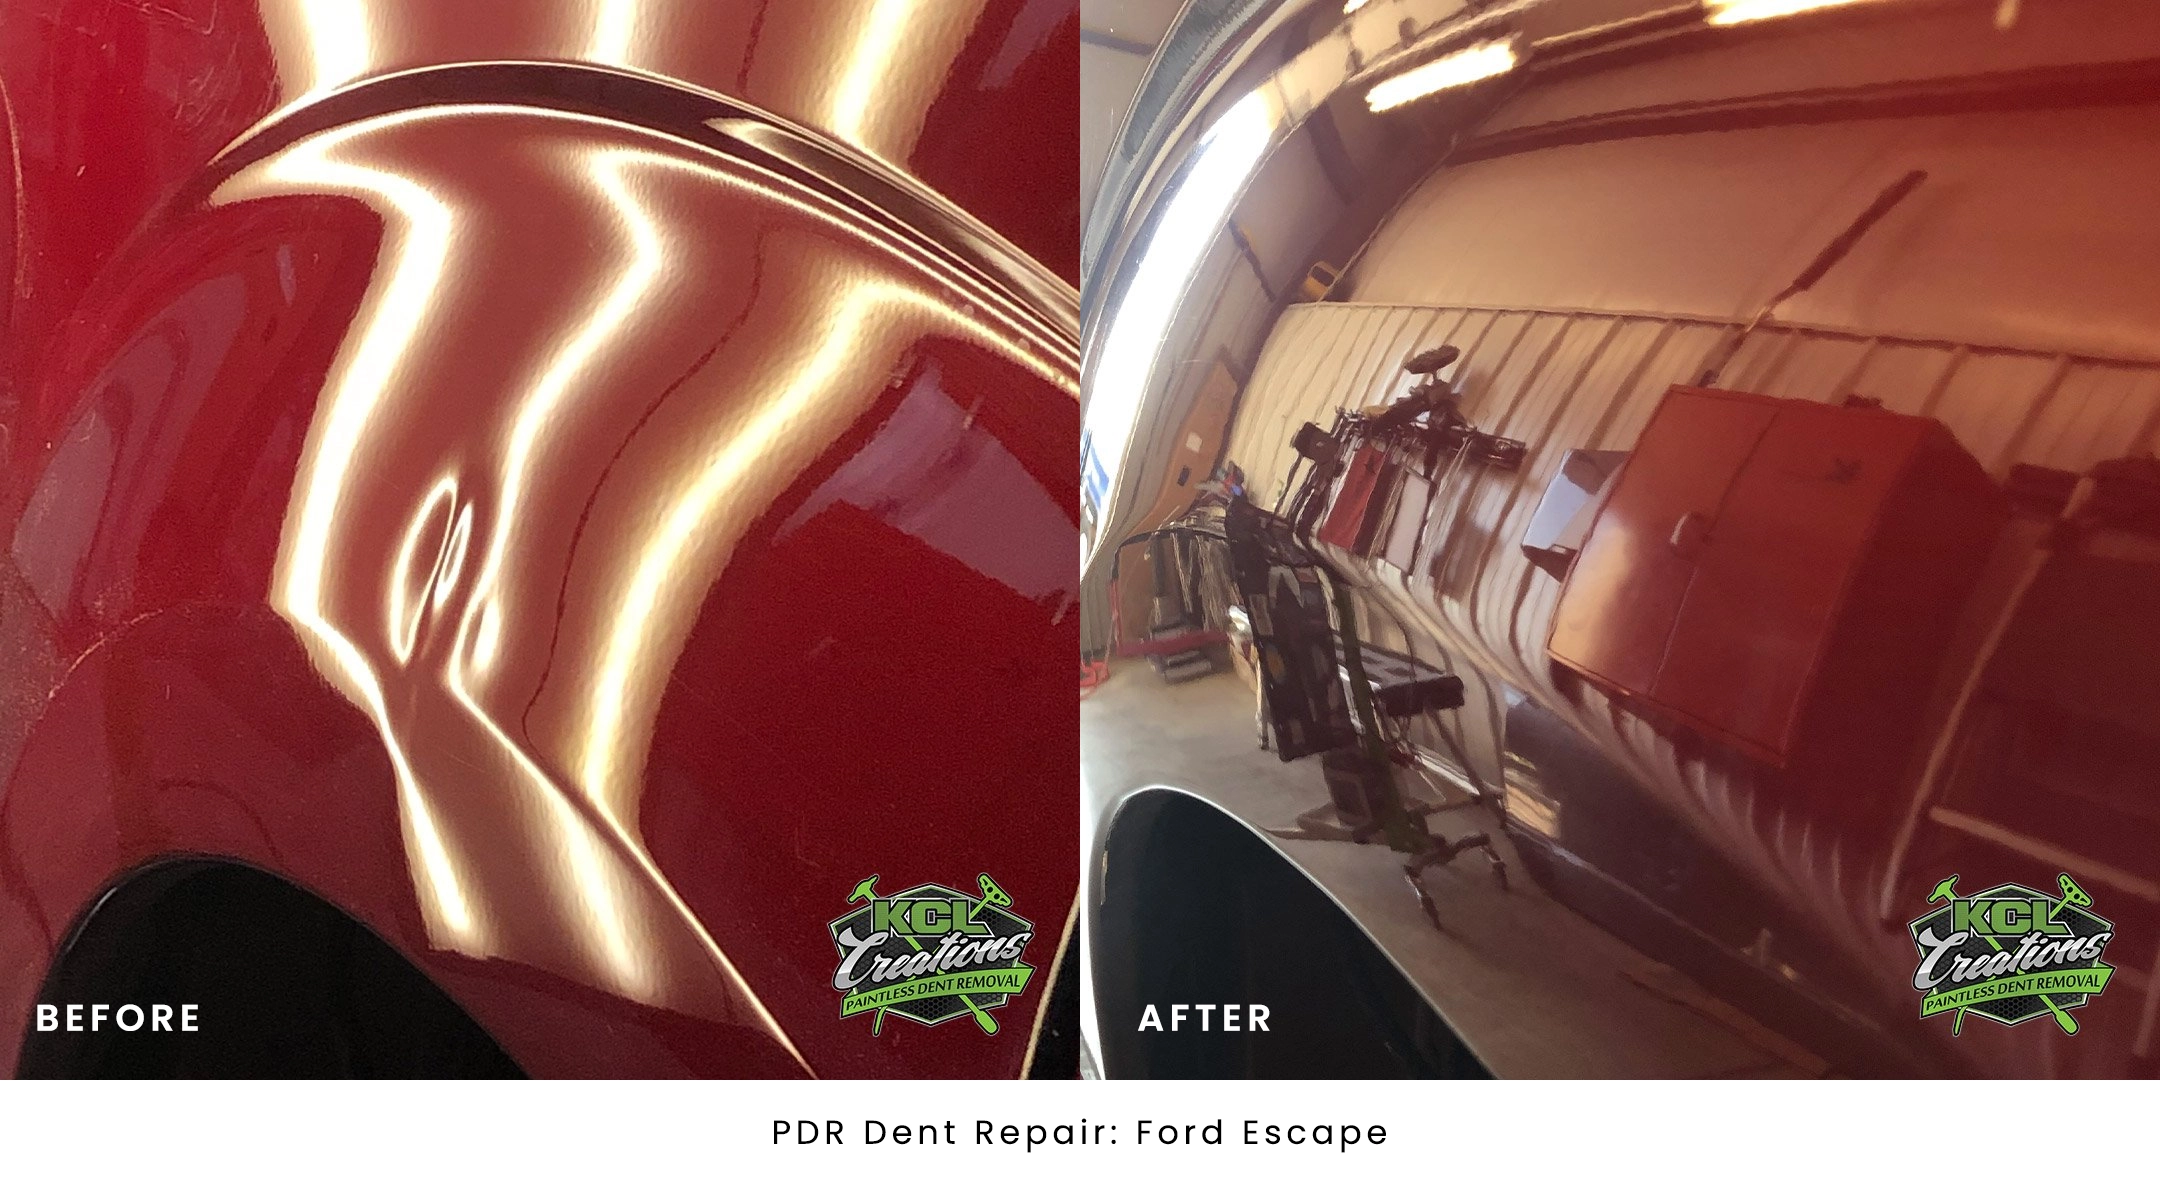 PDR Dent Repair Ford Escape copy